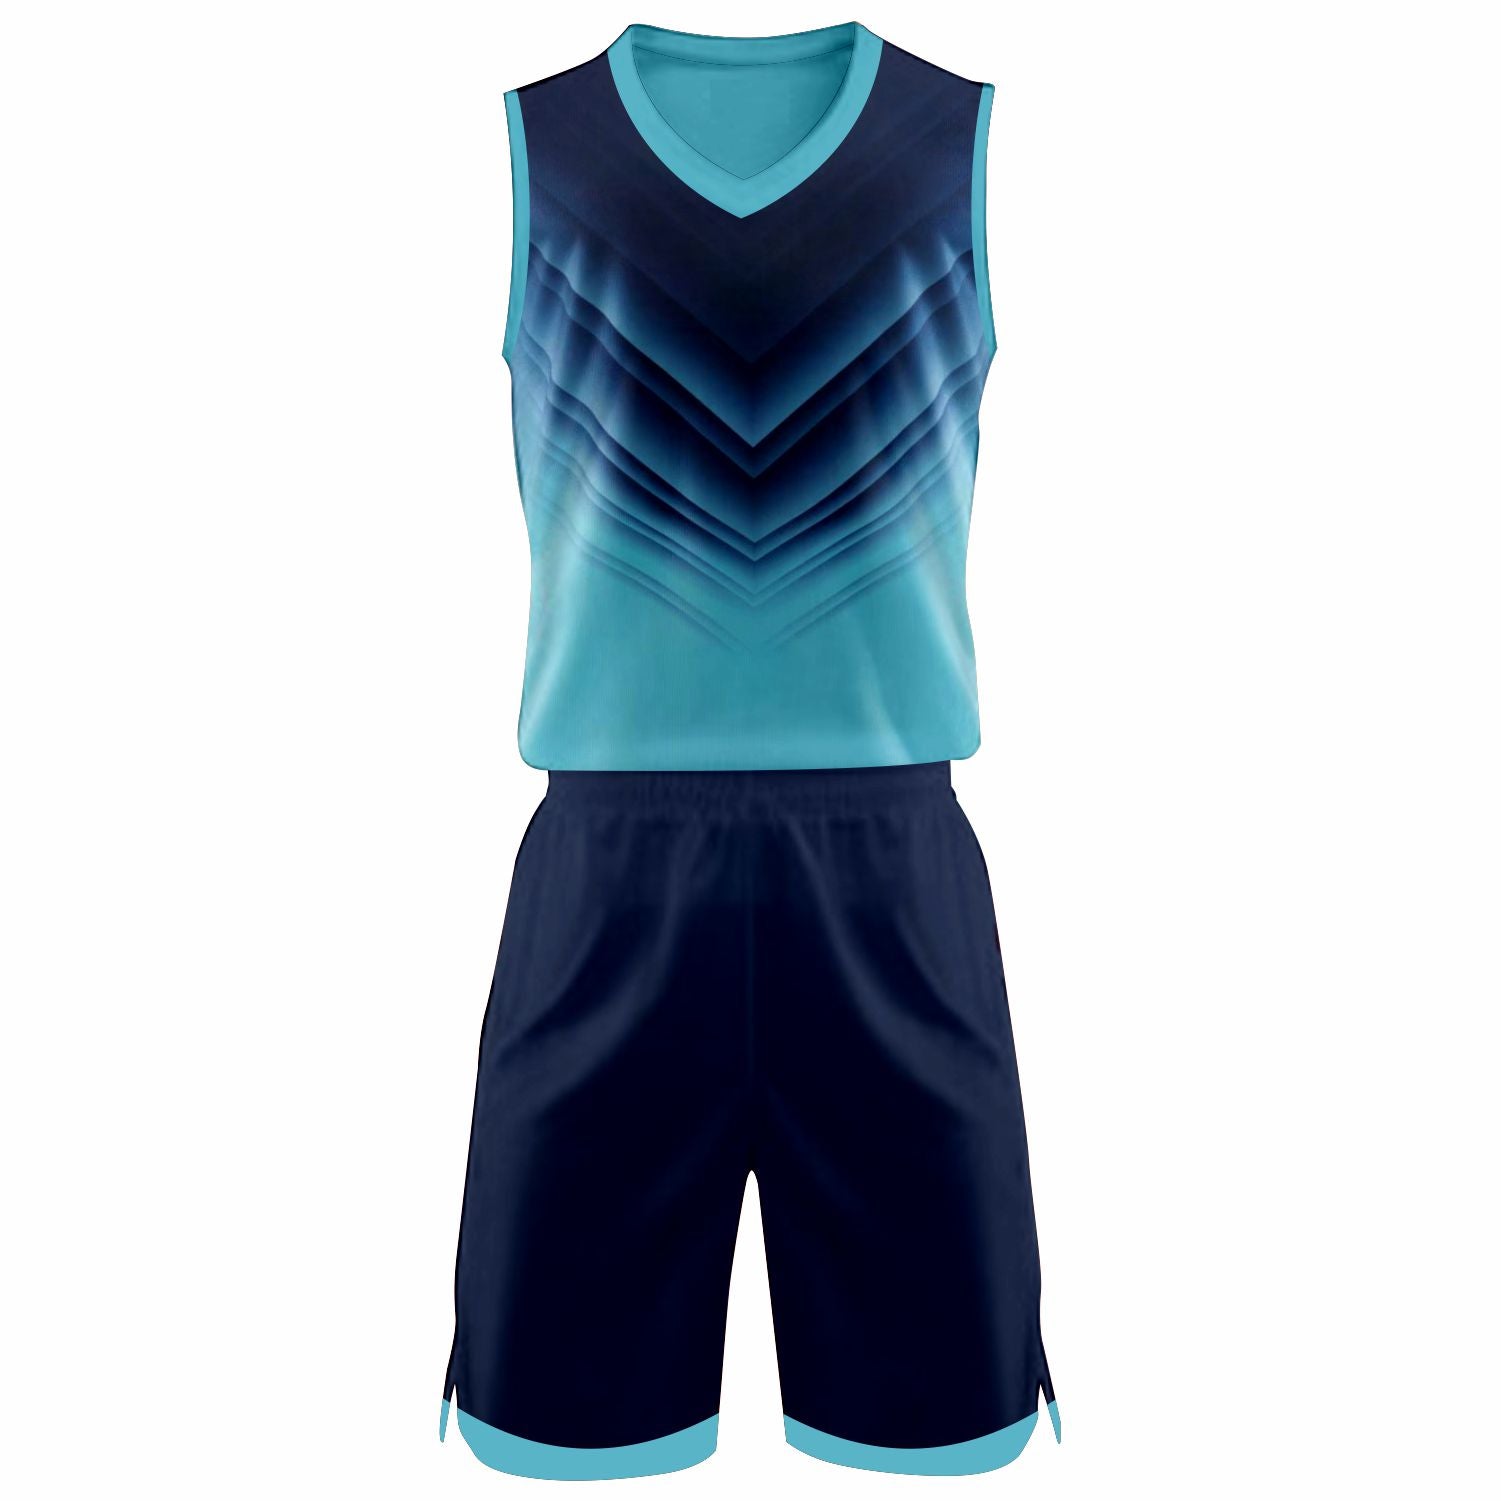 STR8 SPORTS, Inc. on X: Custom made sublimated basketball uniform